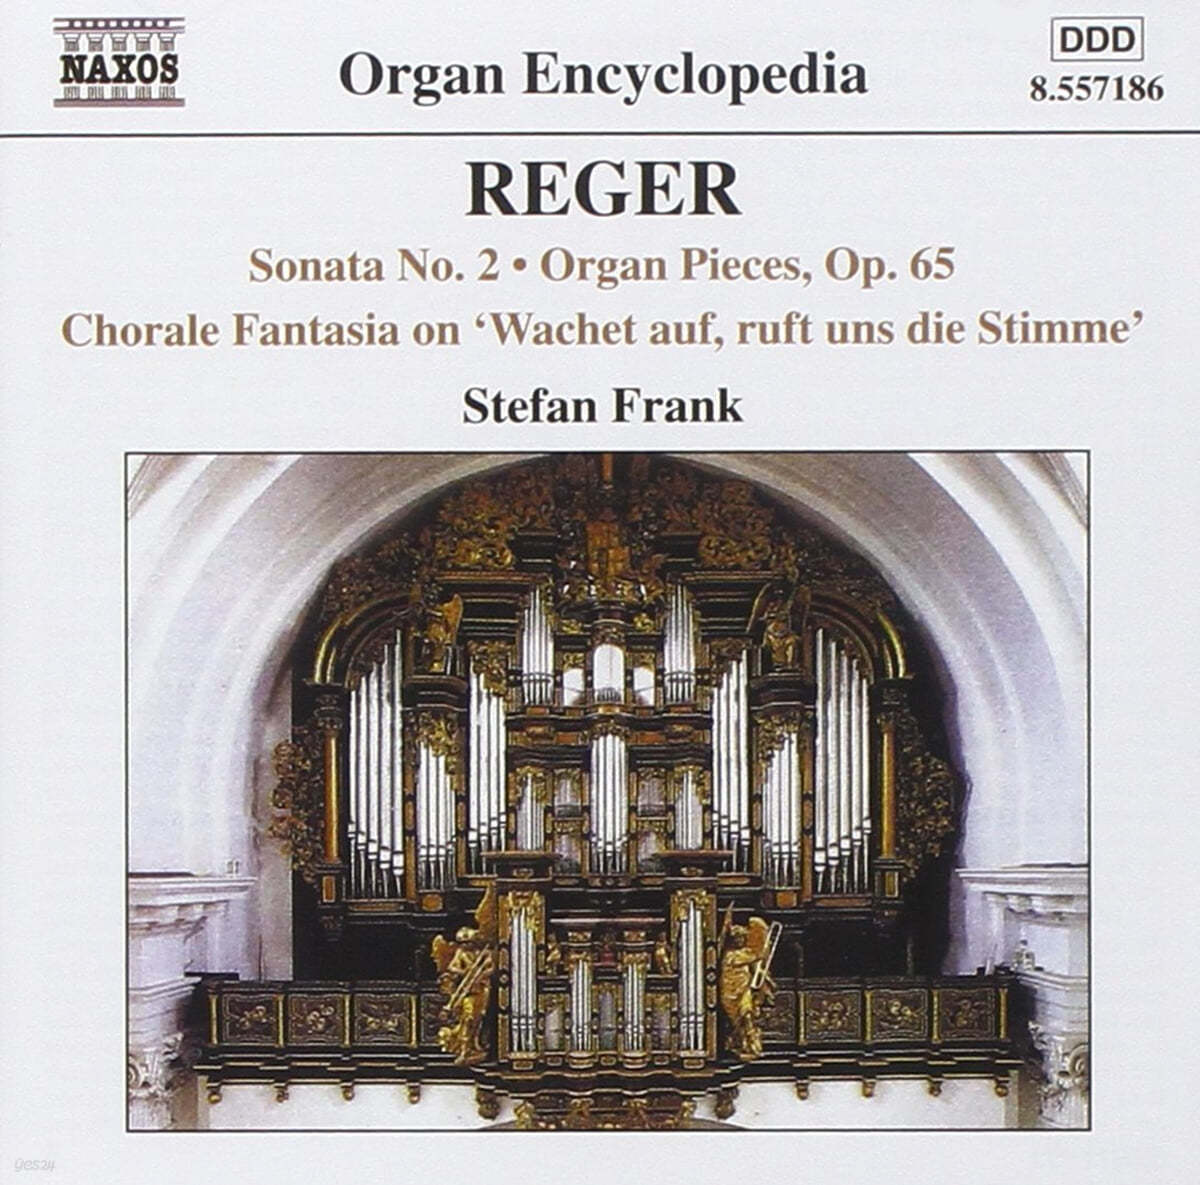 Stefan Frank 막스 레거: 오르간 작품집 5집 (Max Reger: Organ Works Vol. 5) 